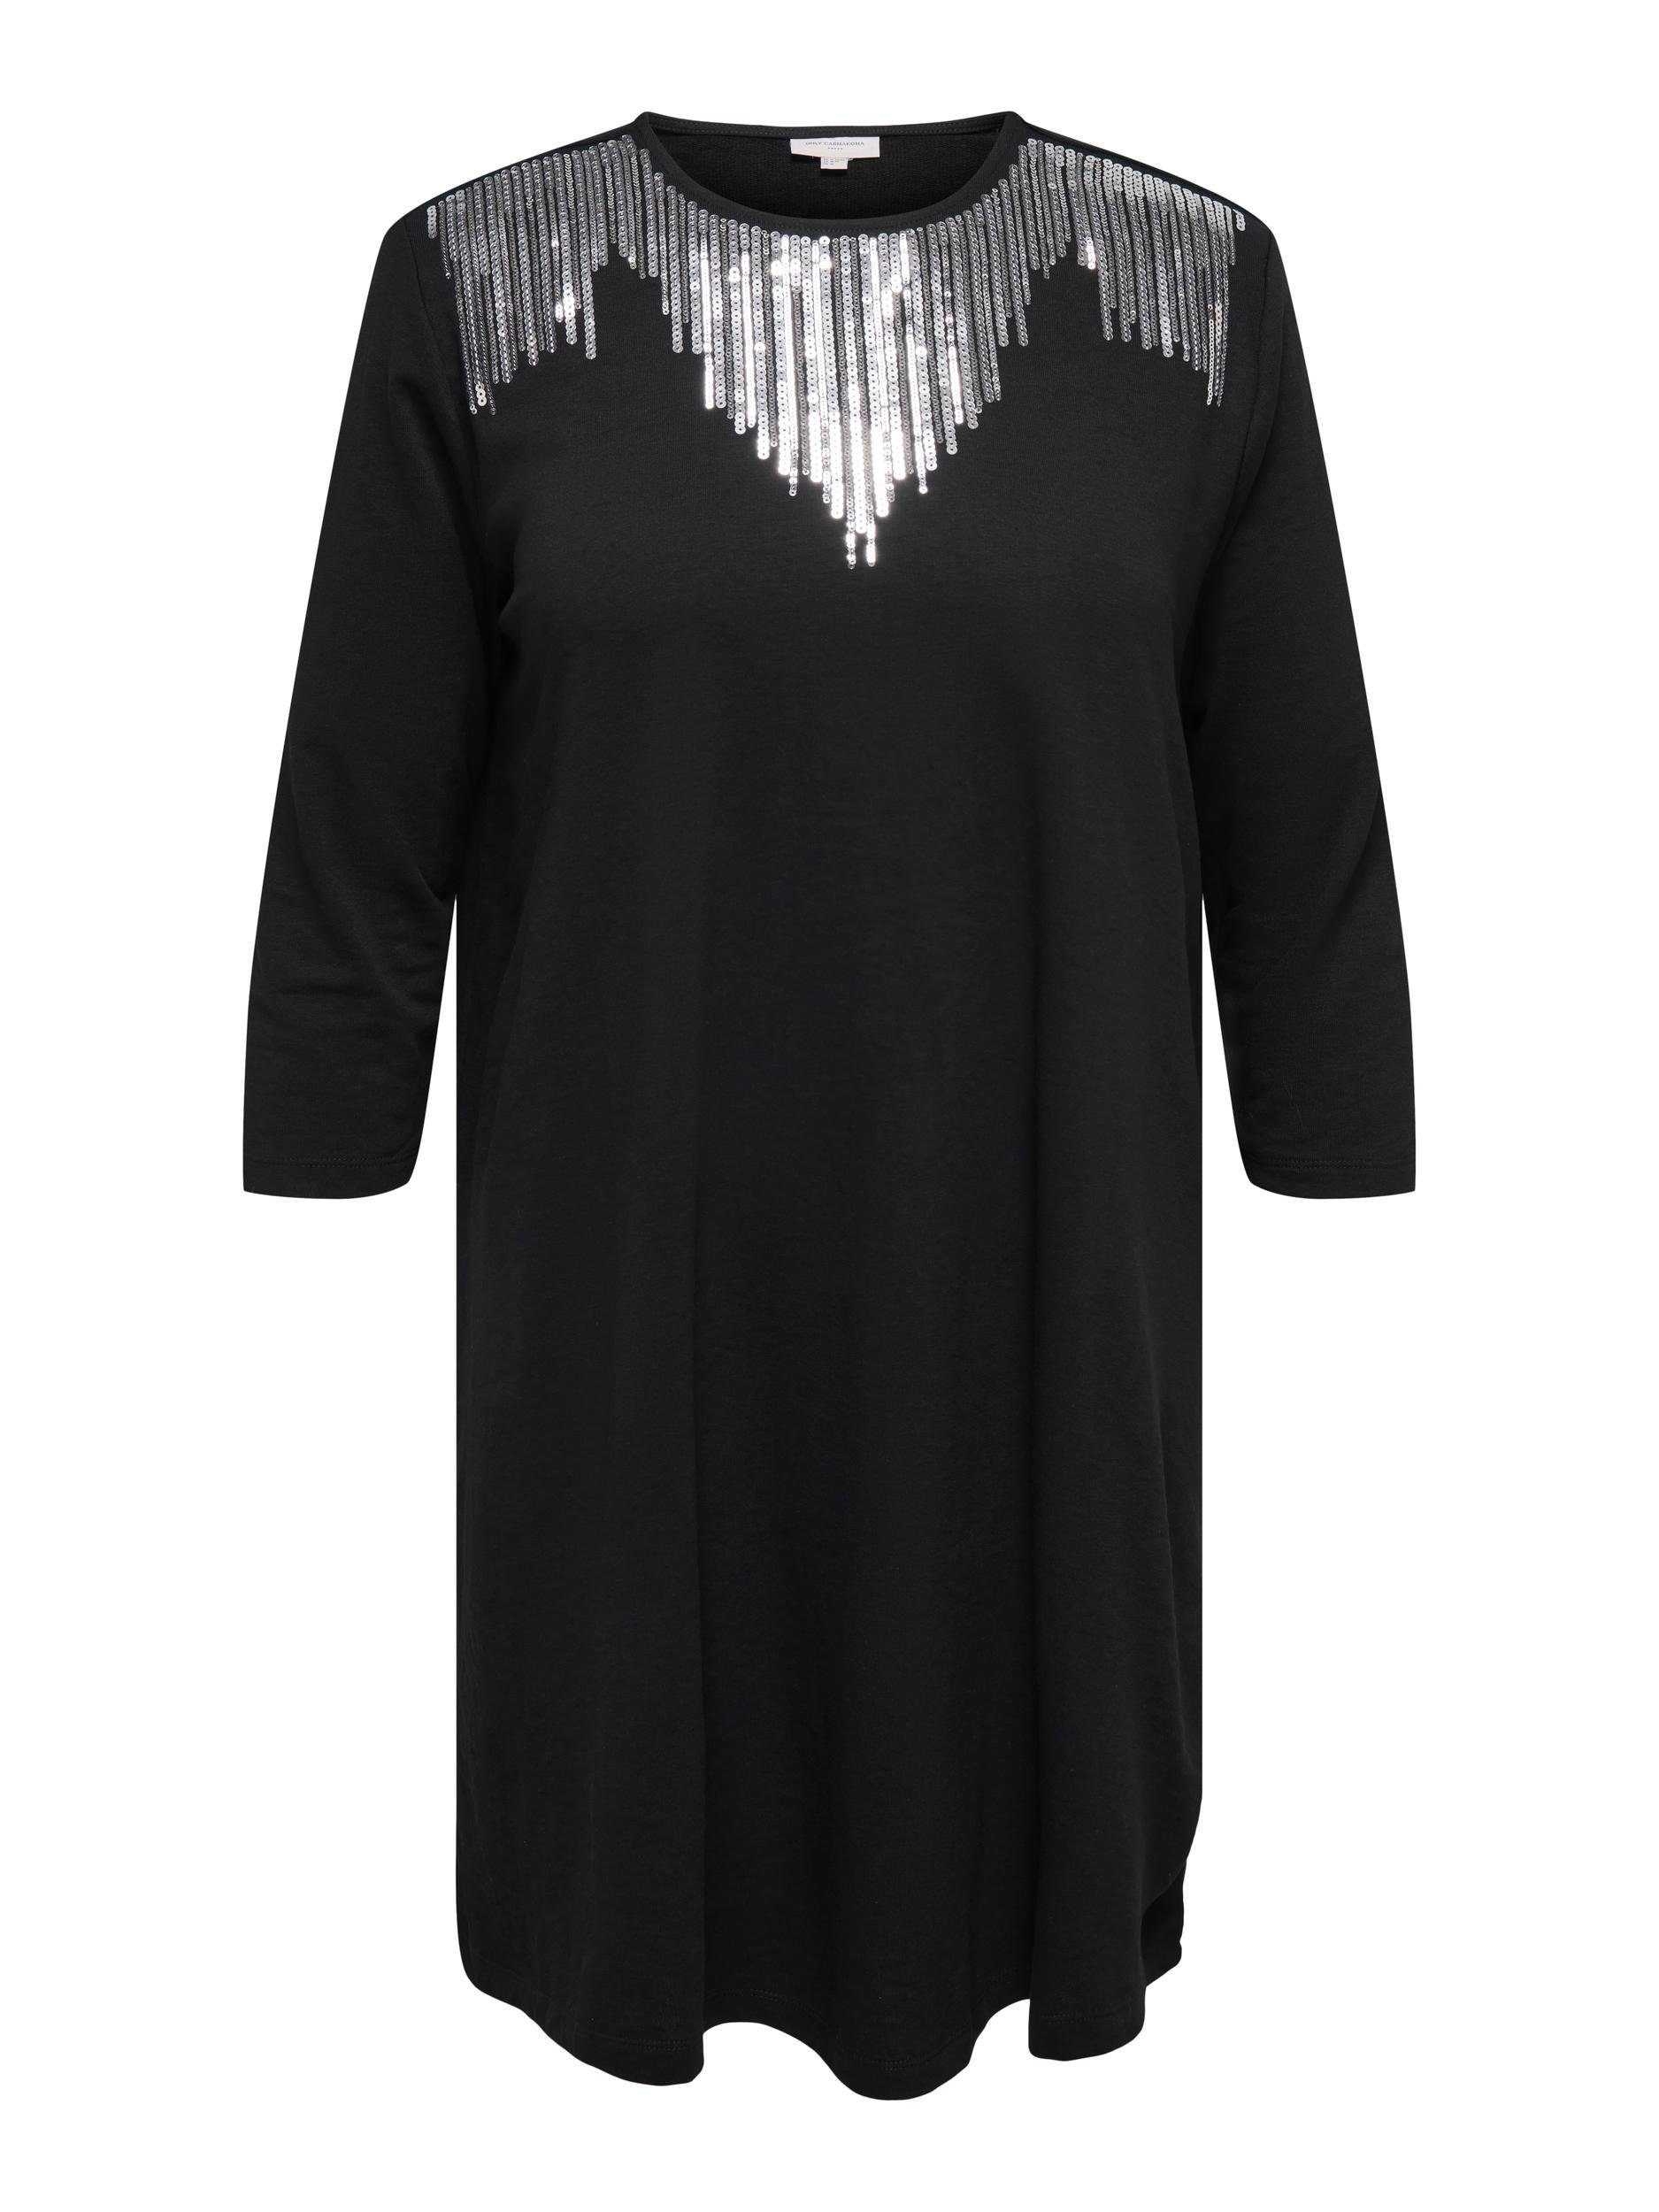 JRS CARMAKOMA BLING CARGENEVA 3/4 DRESS Jerseykleid Black ONLY Detail:SILVER SEQUINS